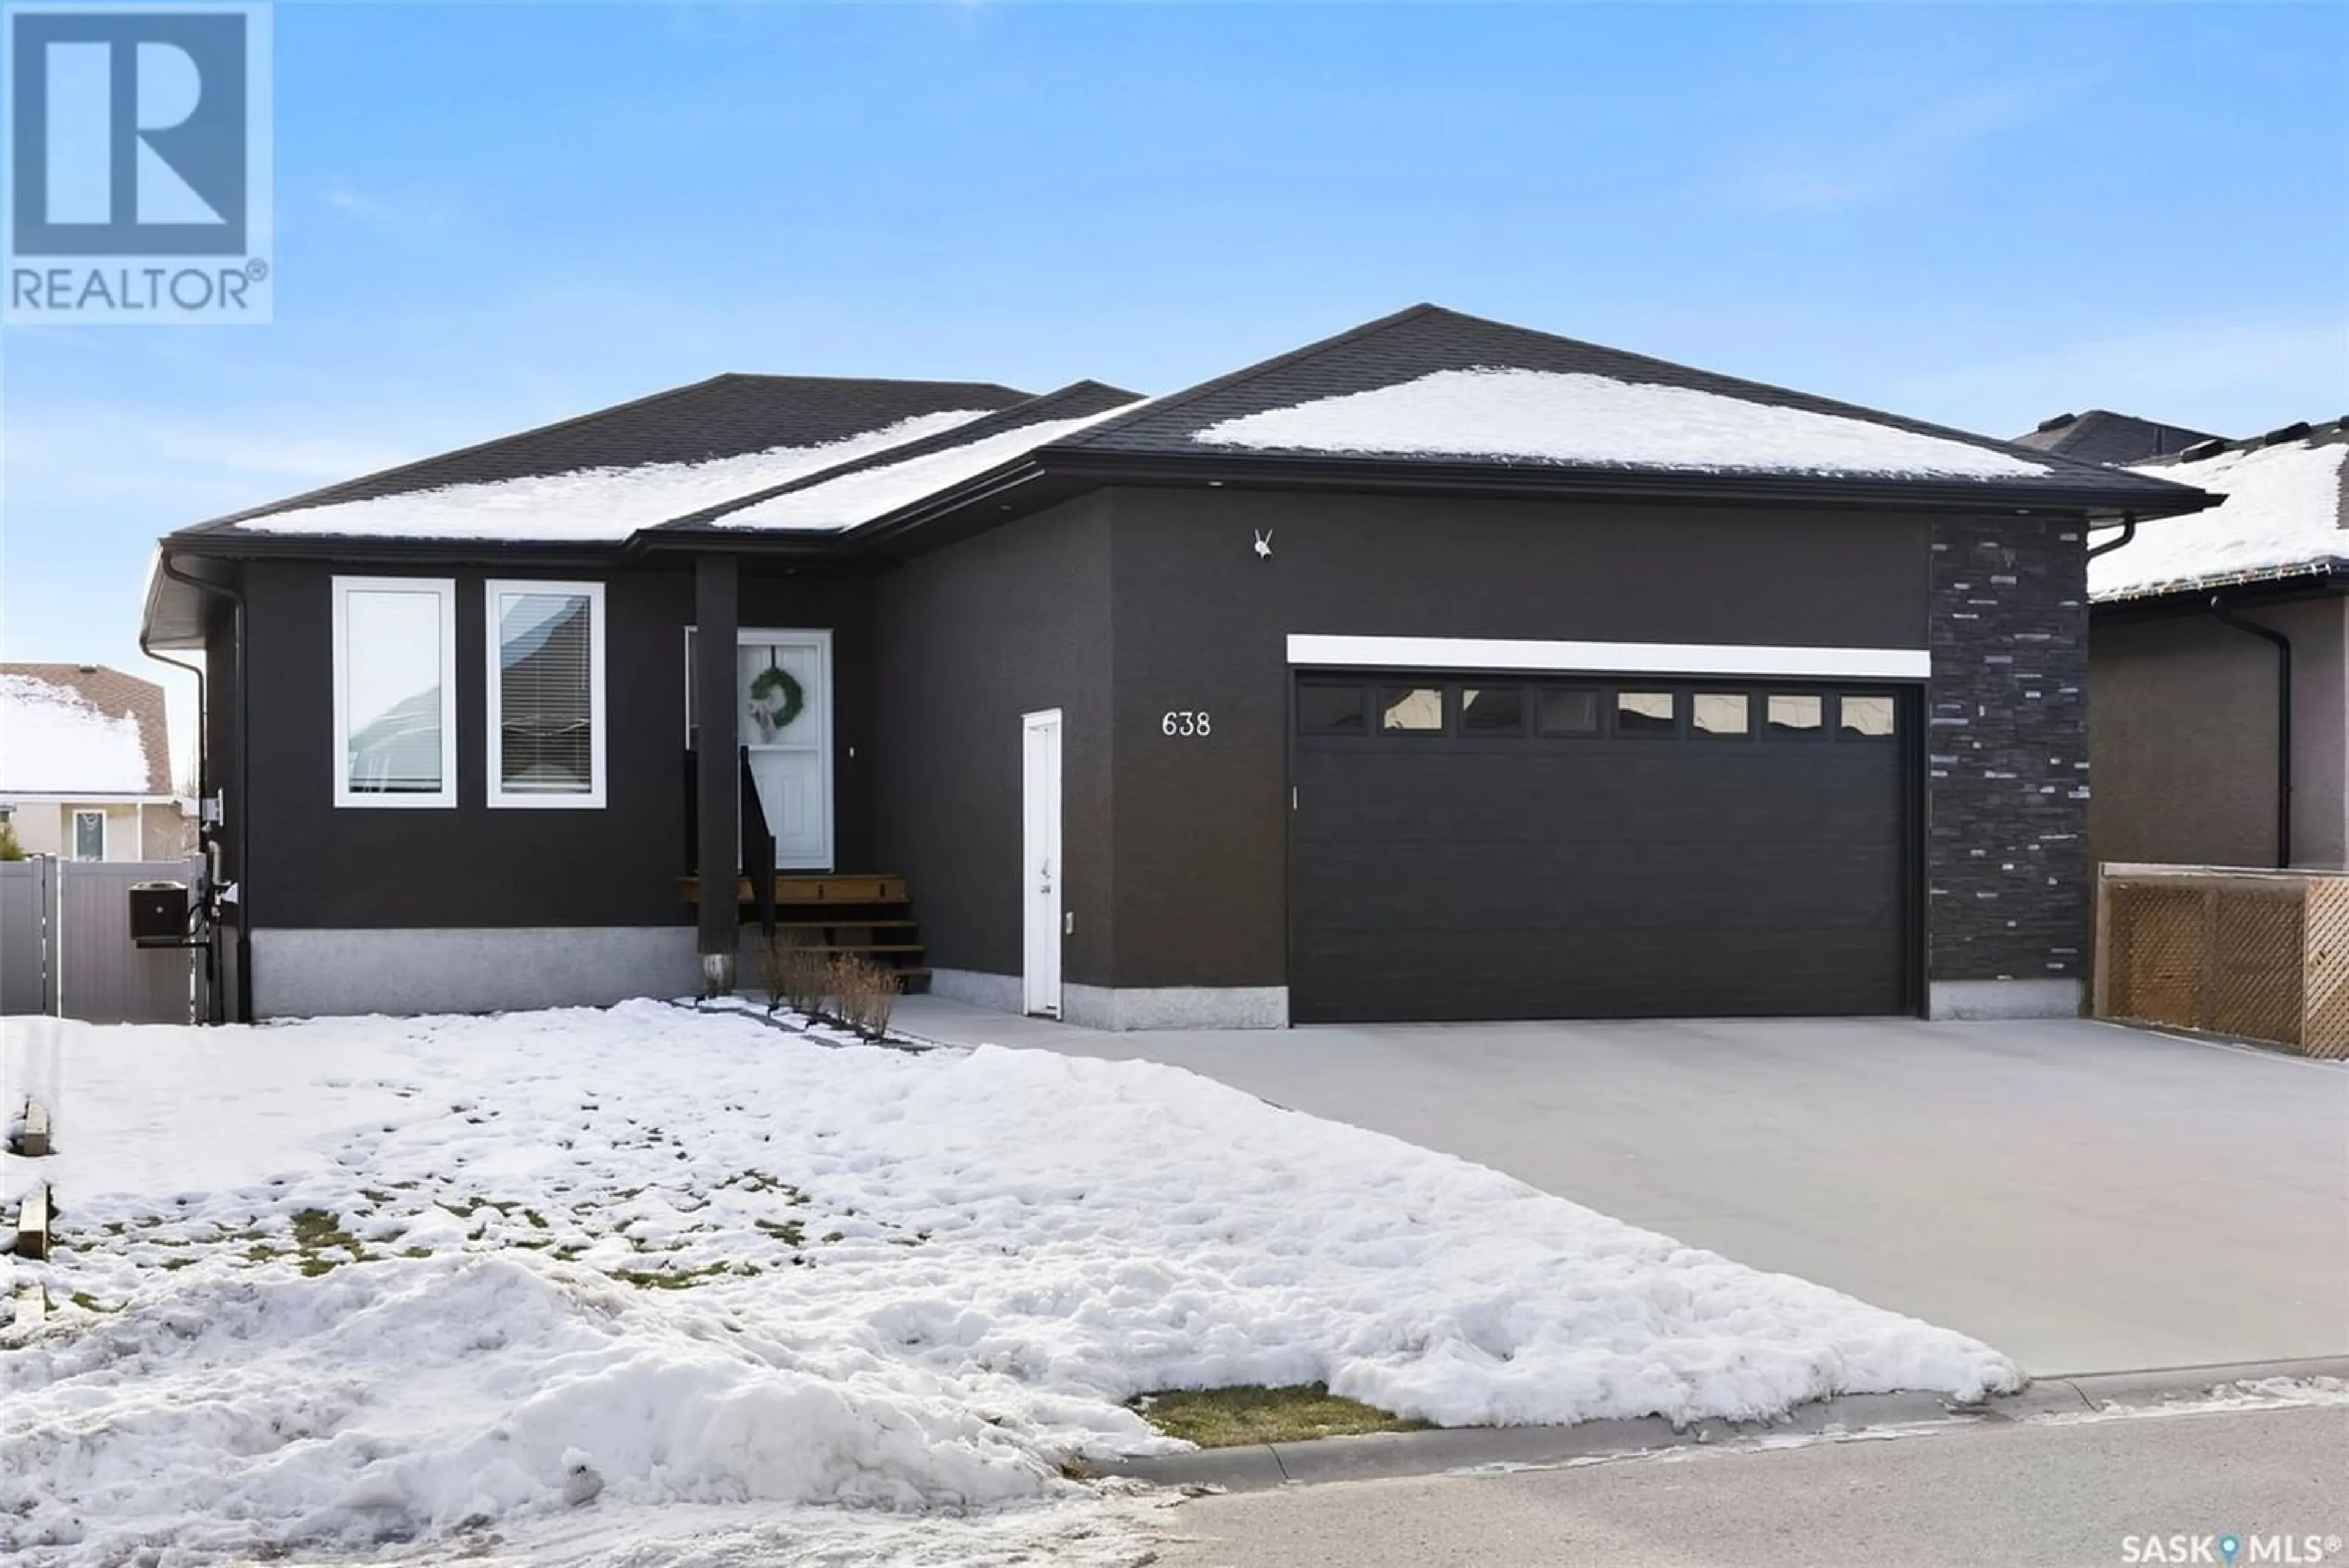 Home with vinyl exterior material for 638 Aspen CRESCENT, Pilot Butte Saskatchewan S0G3Z0